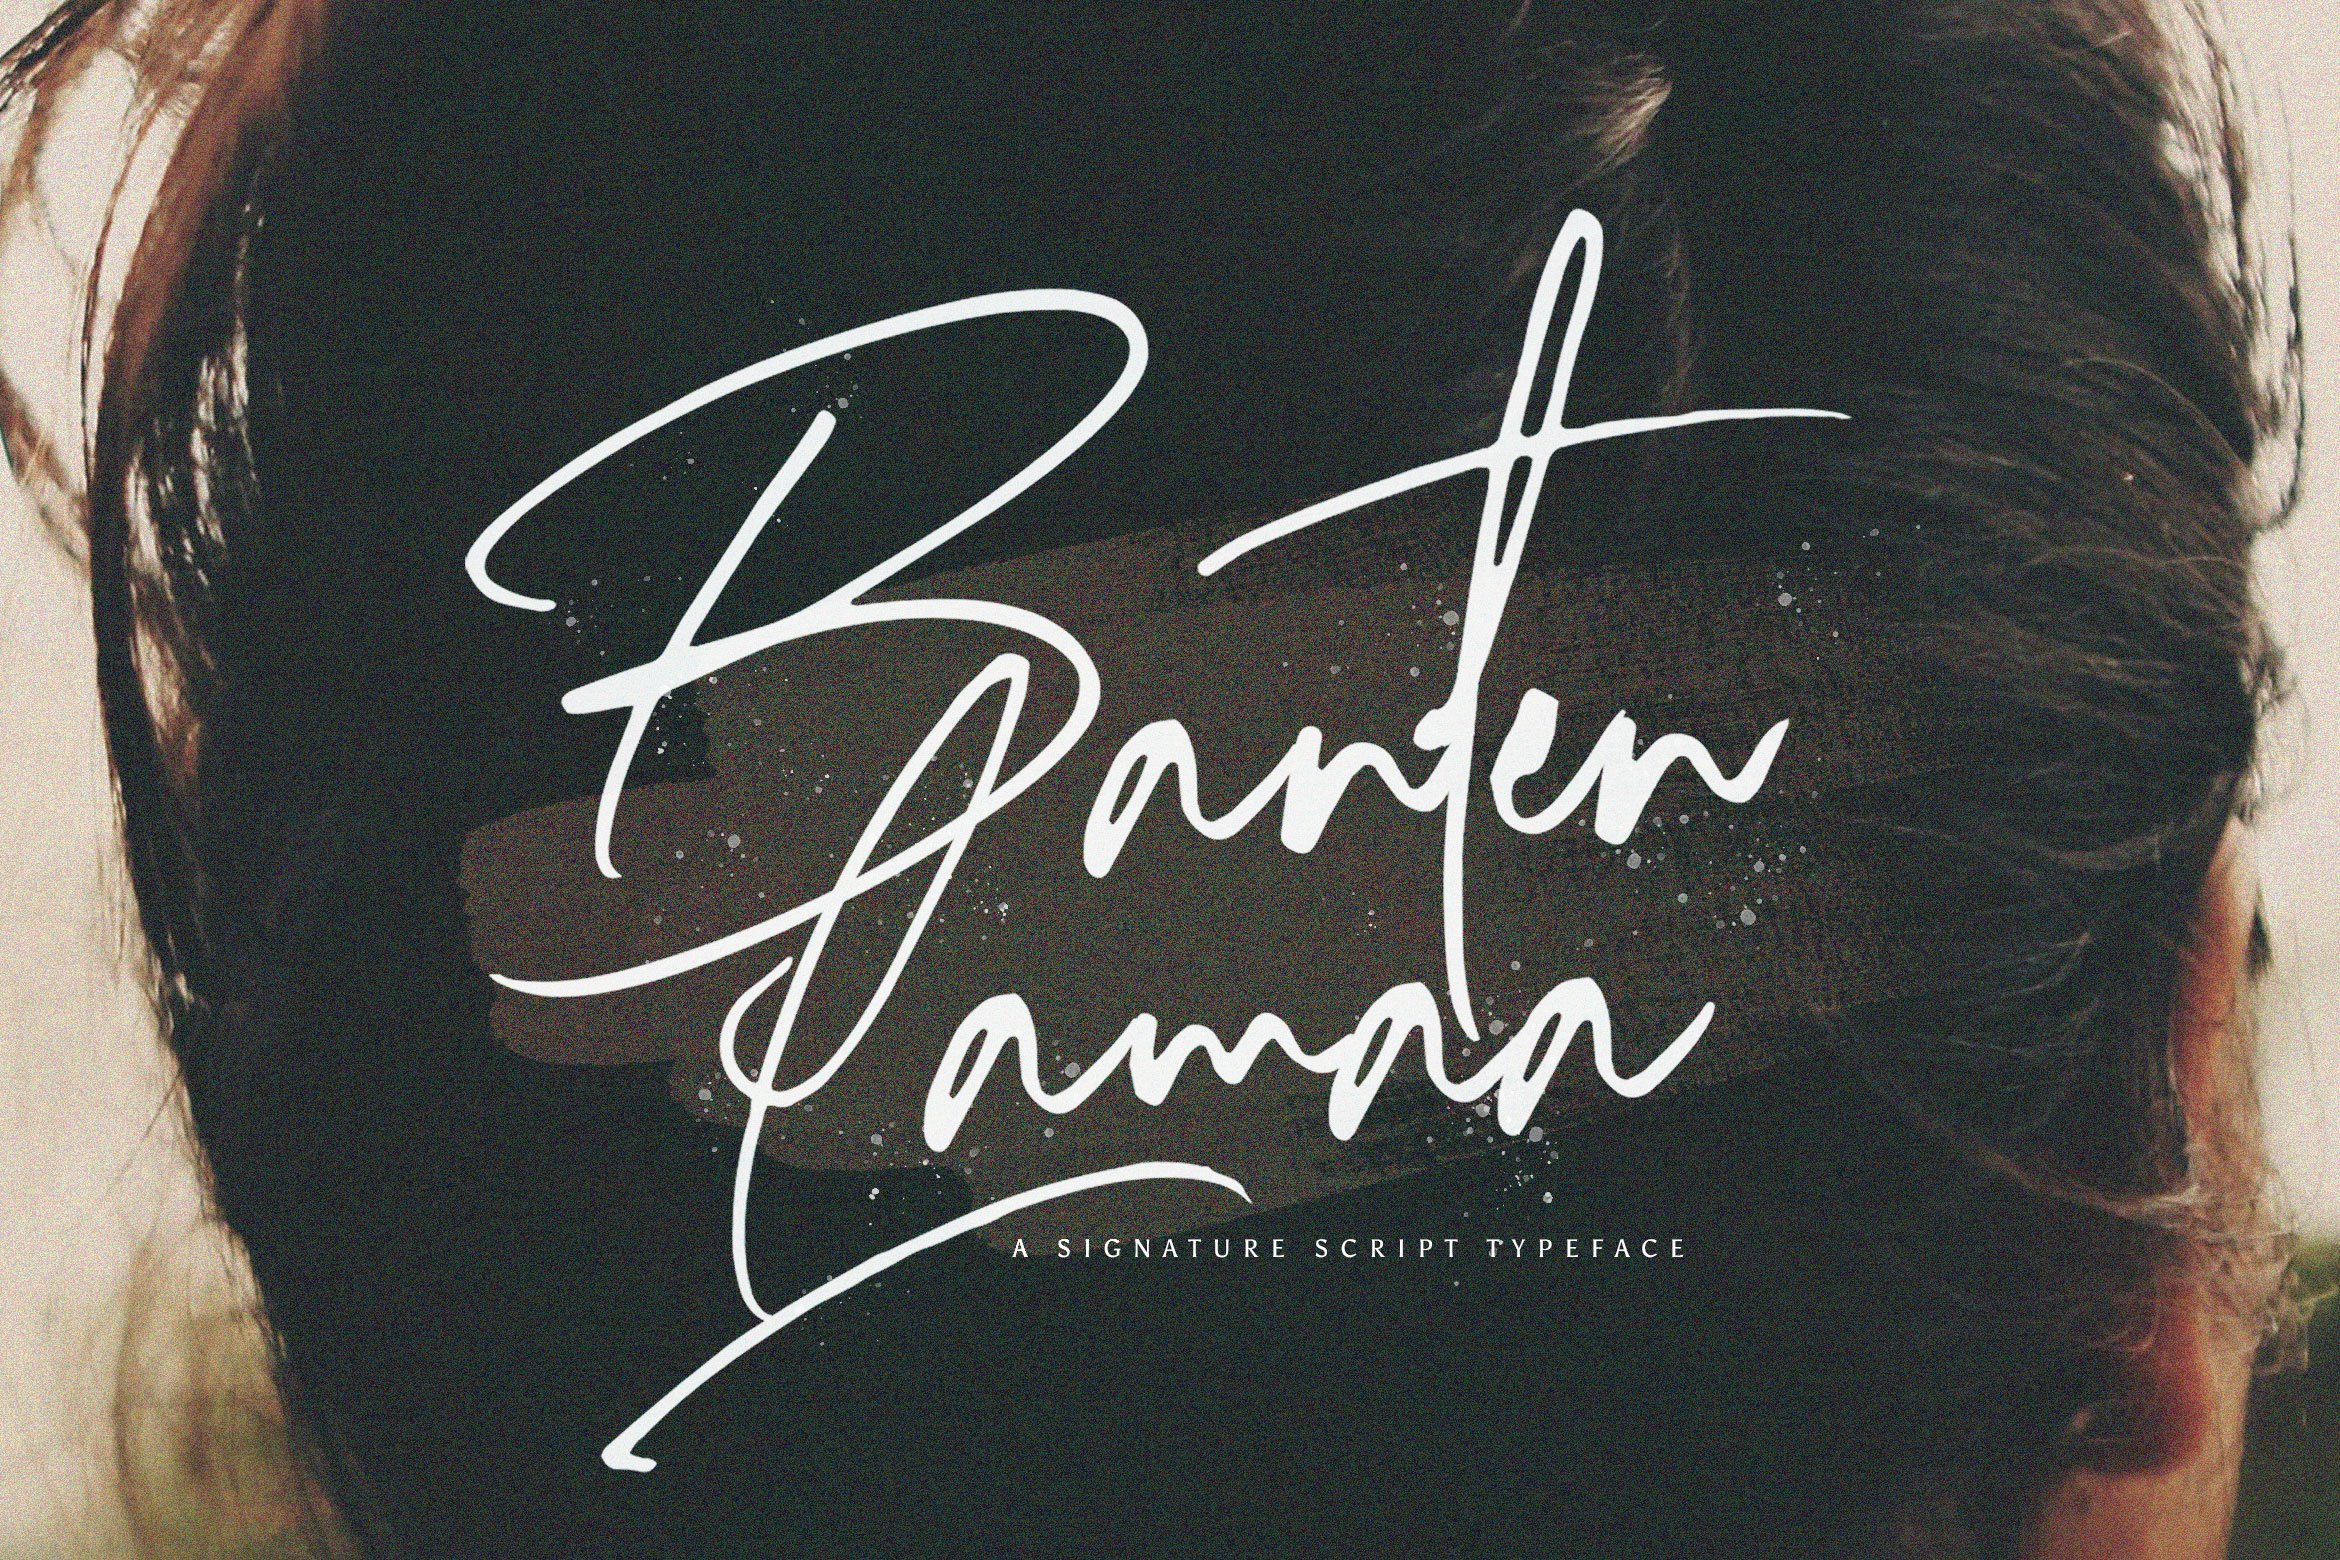 Banten Lama - Signature Script Font cover image.